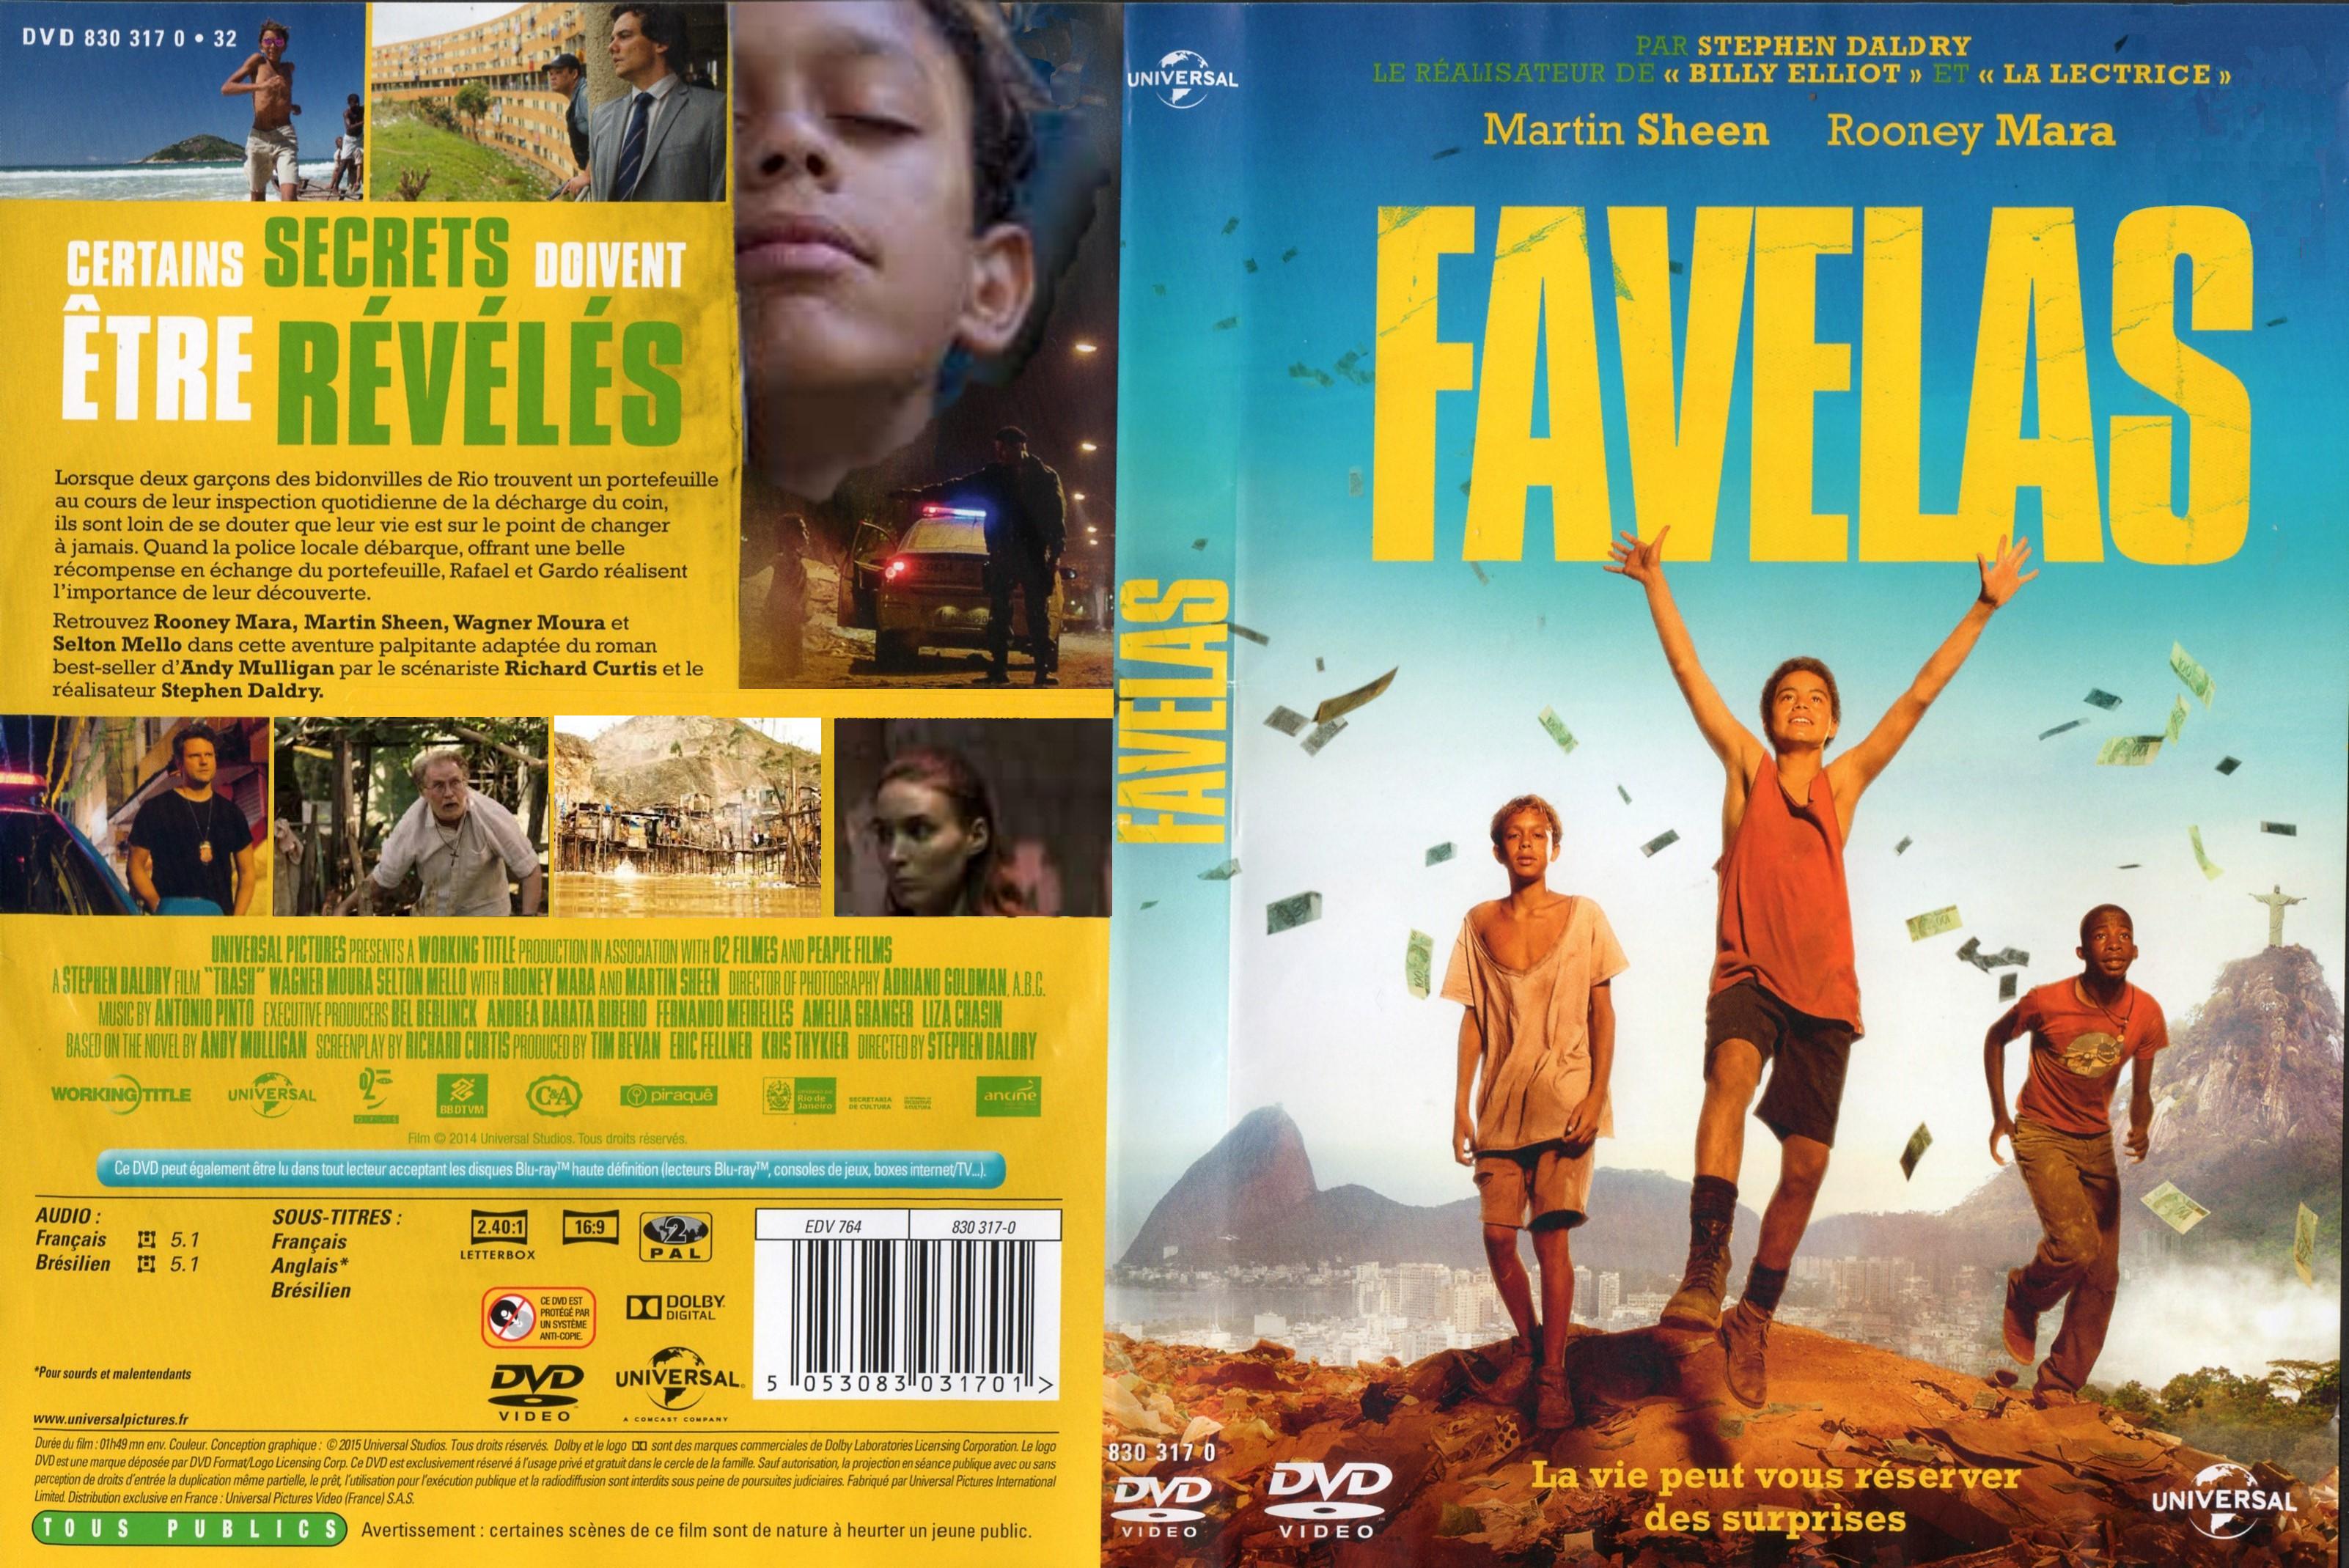 Jaquette DVD Favelas custom